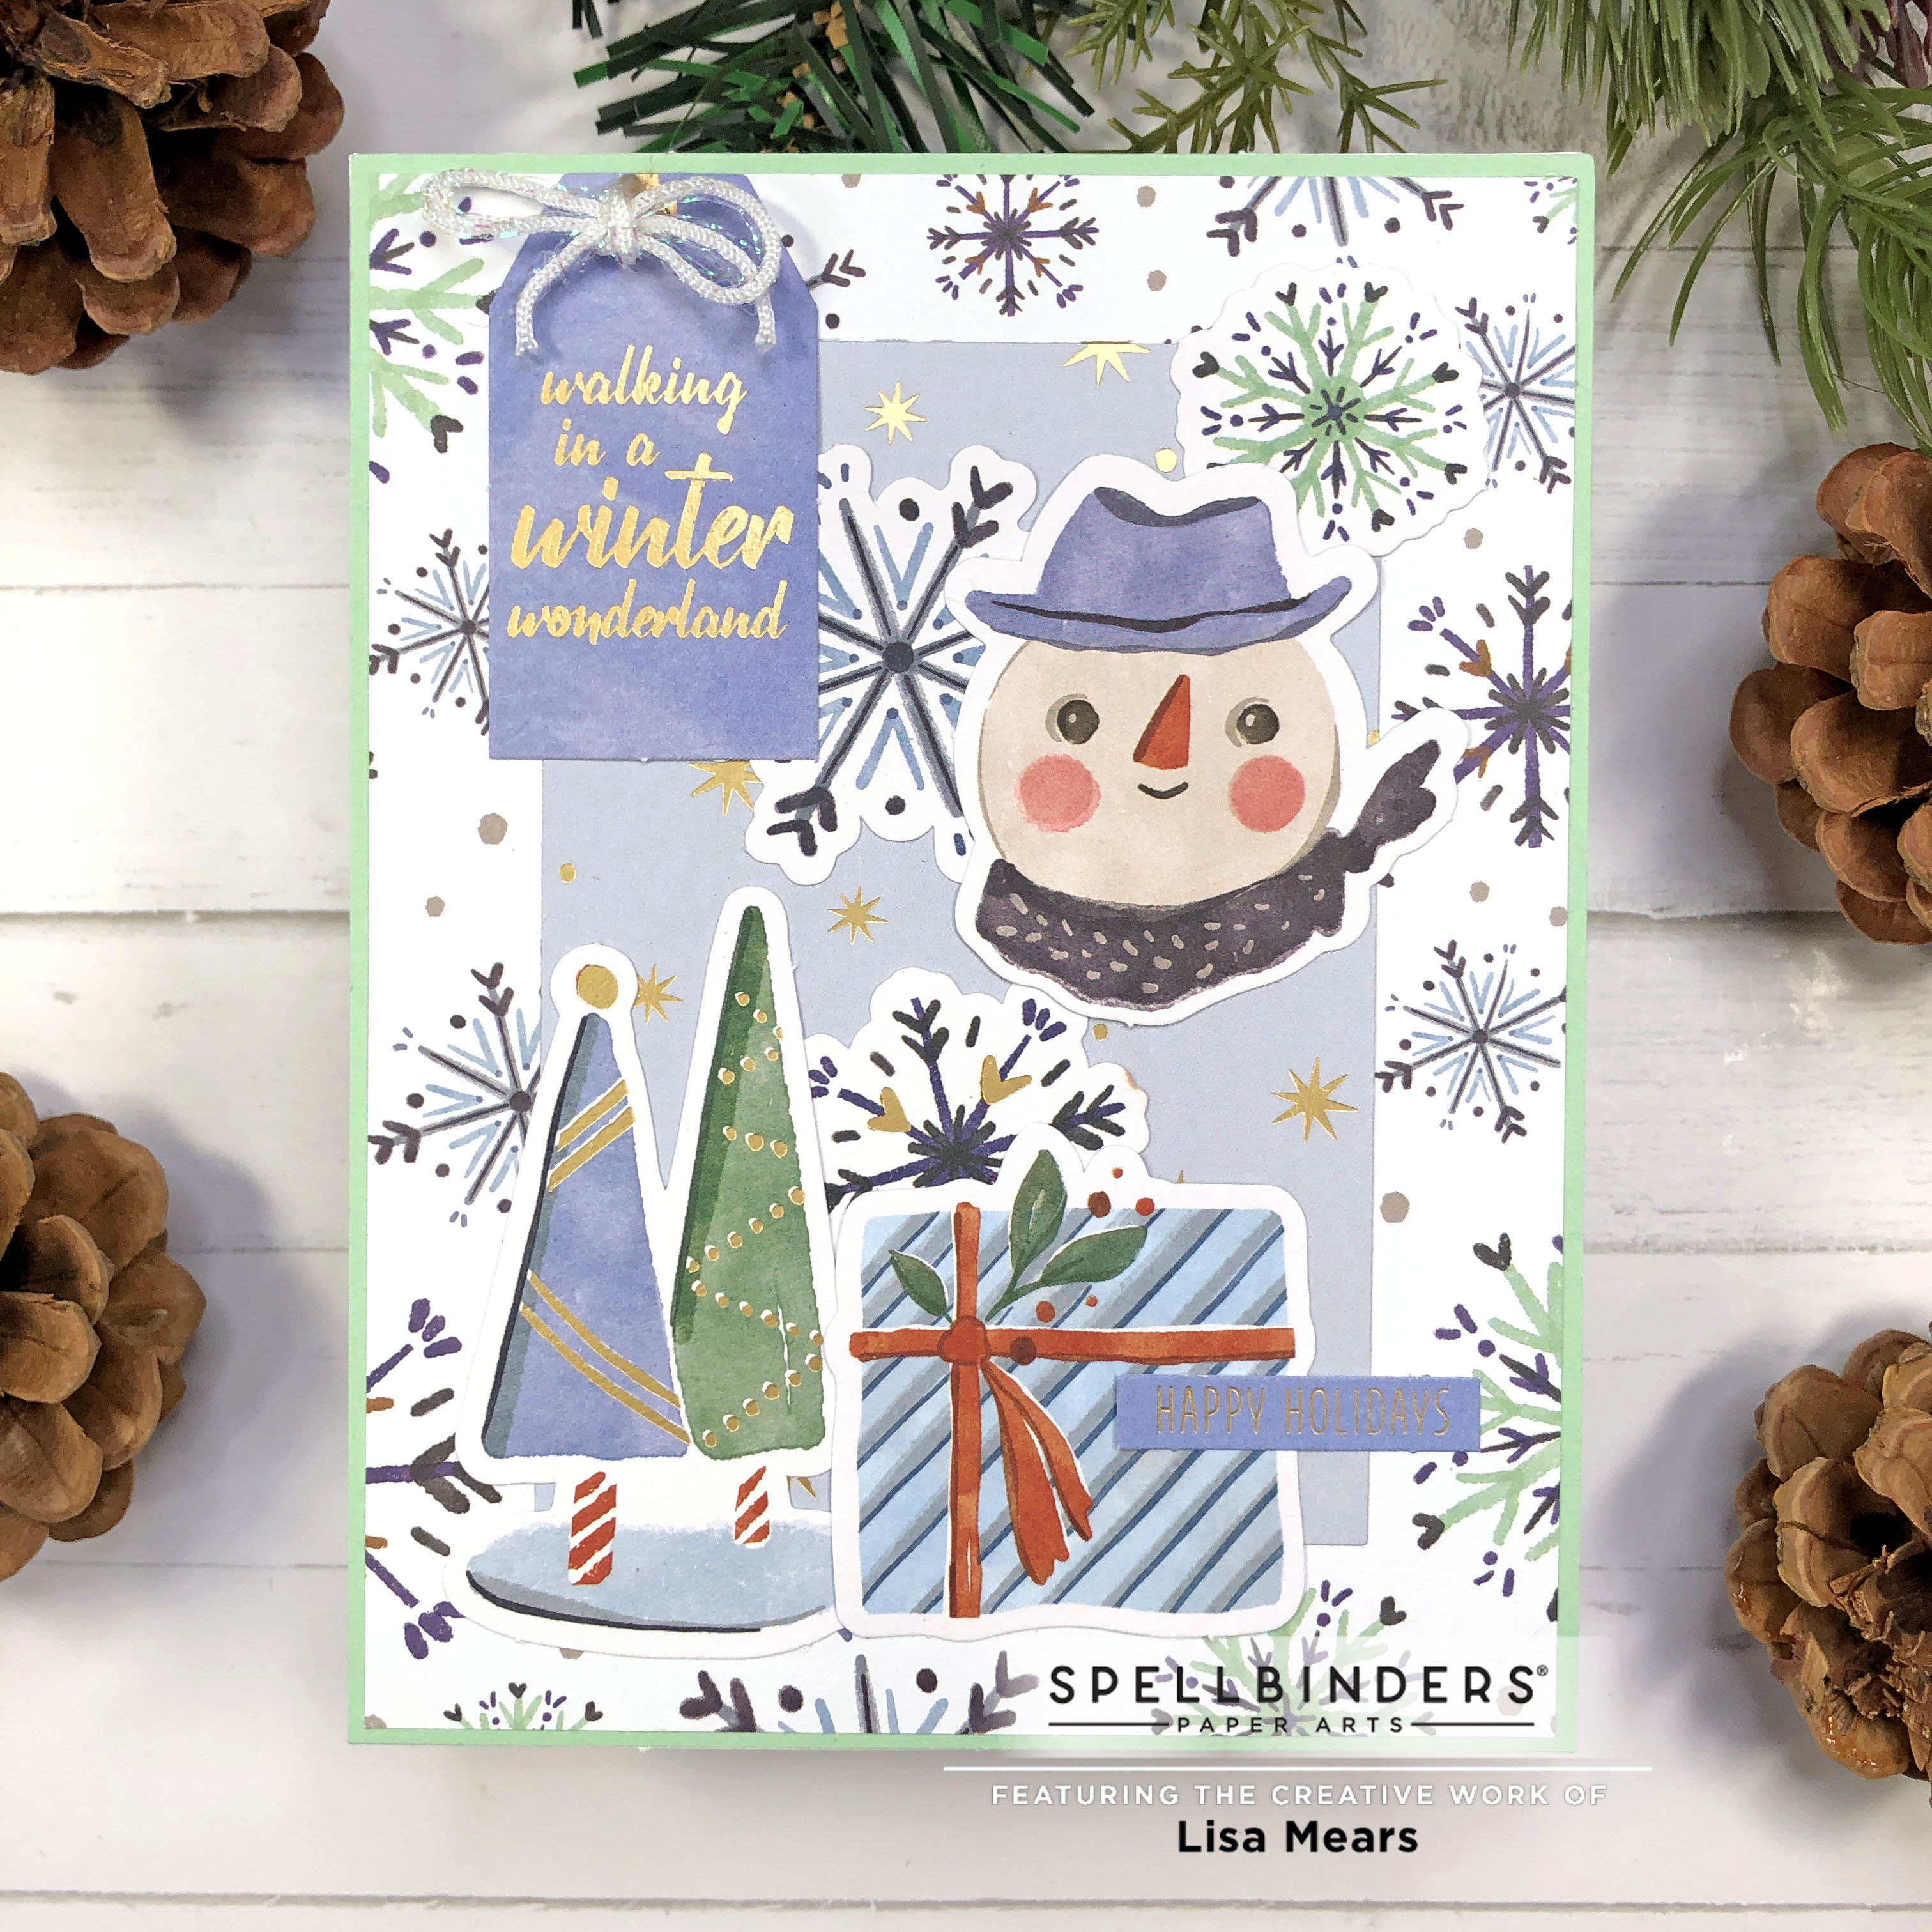 Spellbinders Winter Wonderland - Christmas Card with snowman and snowflakes